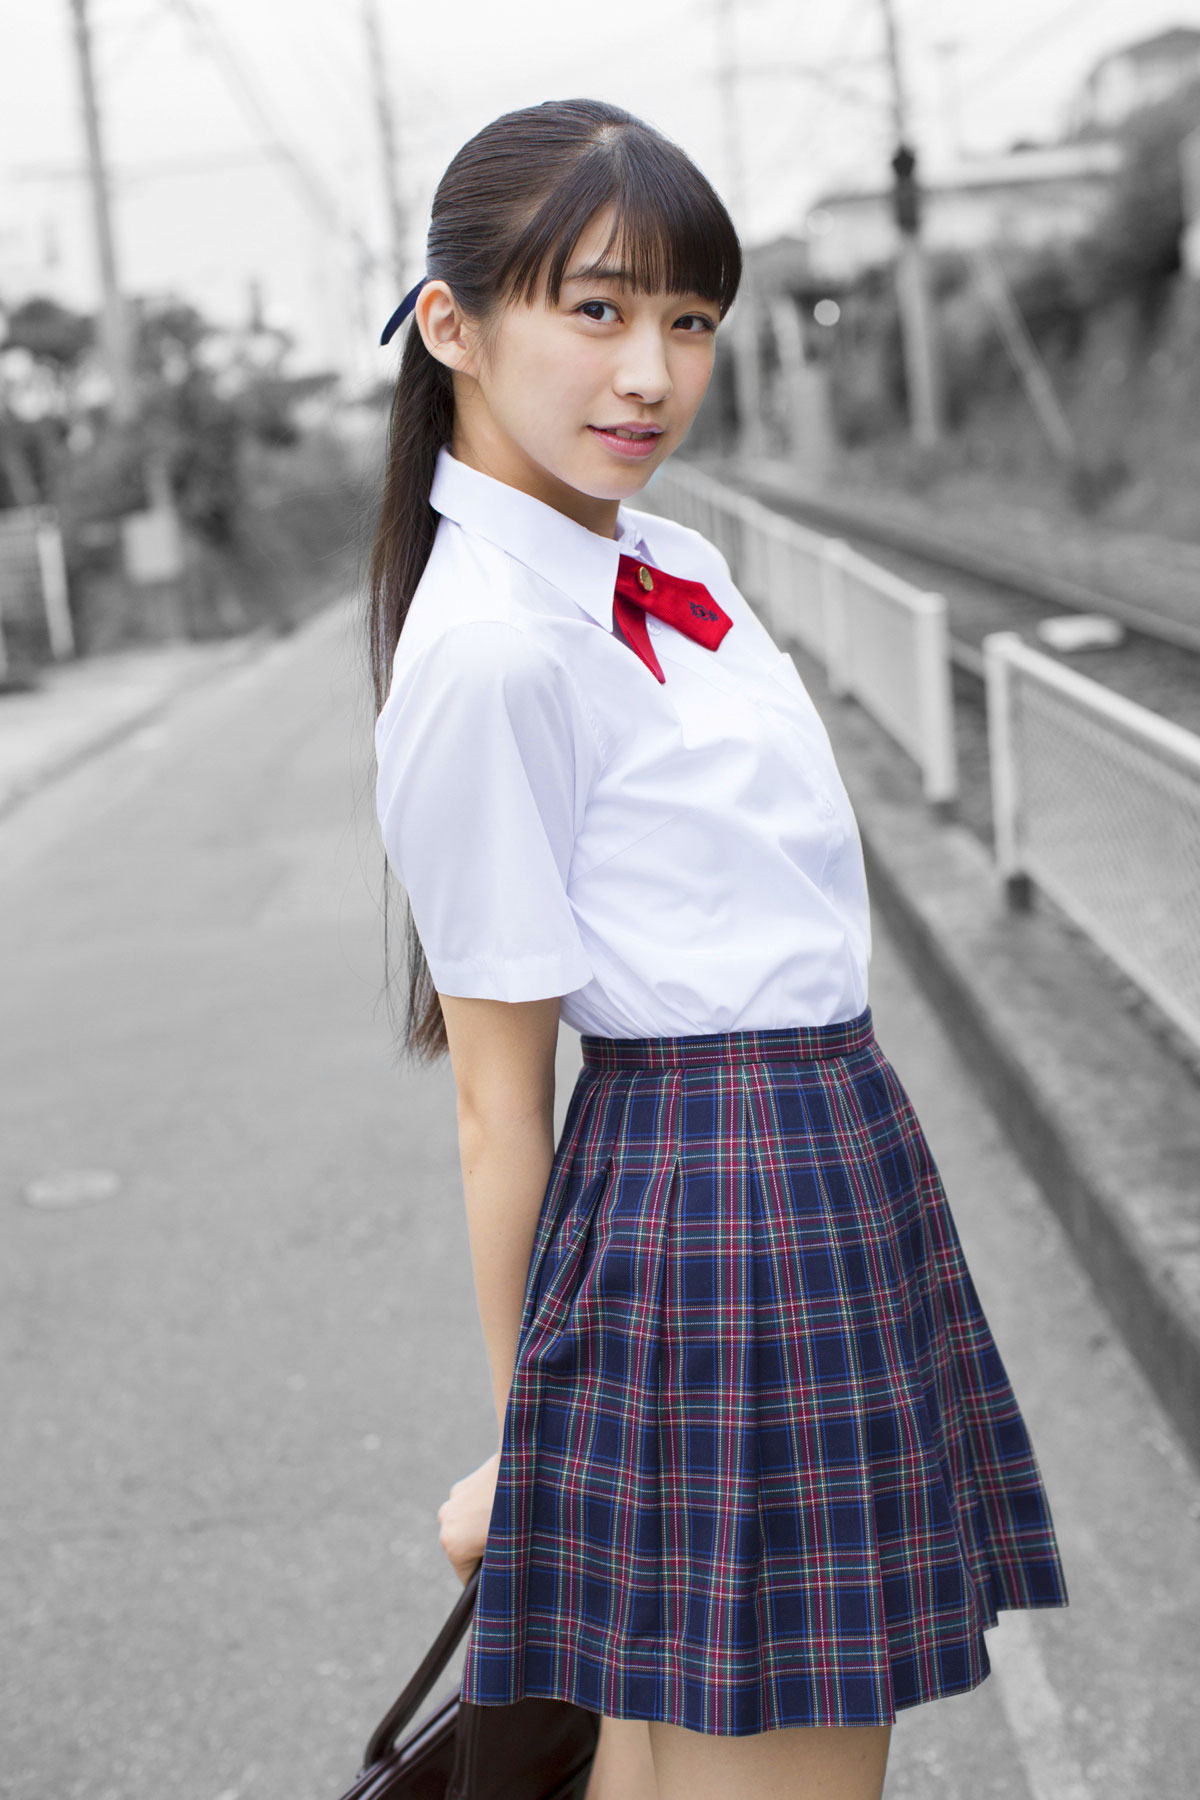 Japanese shemale schoolgirl